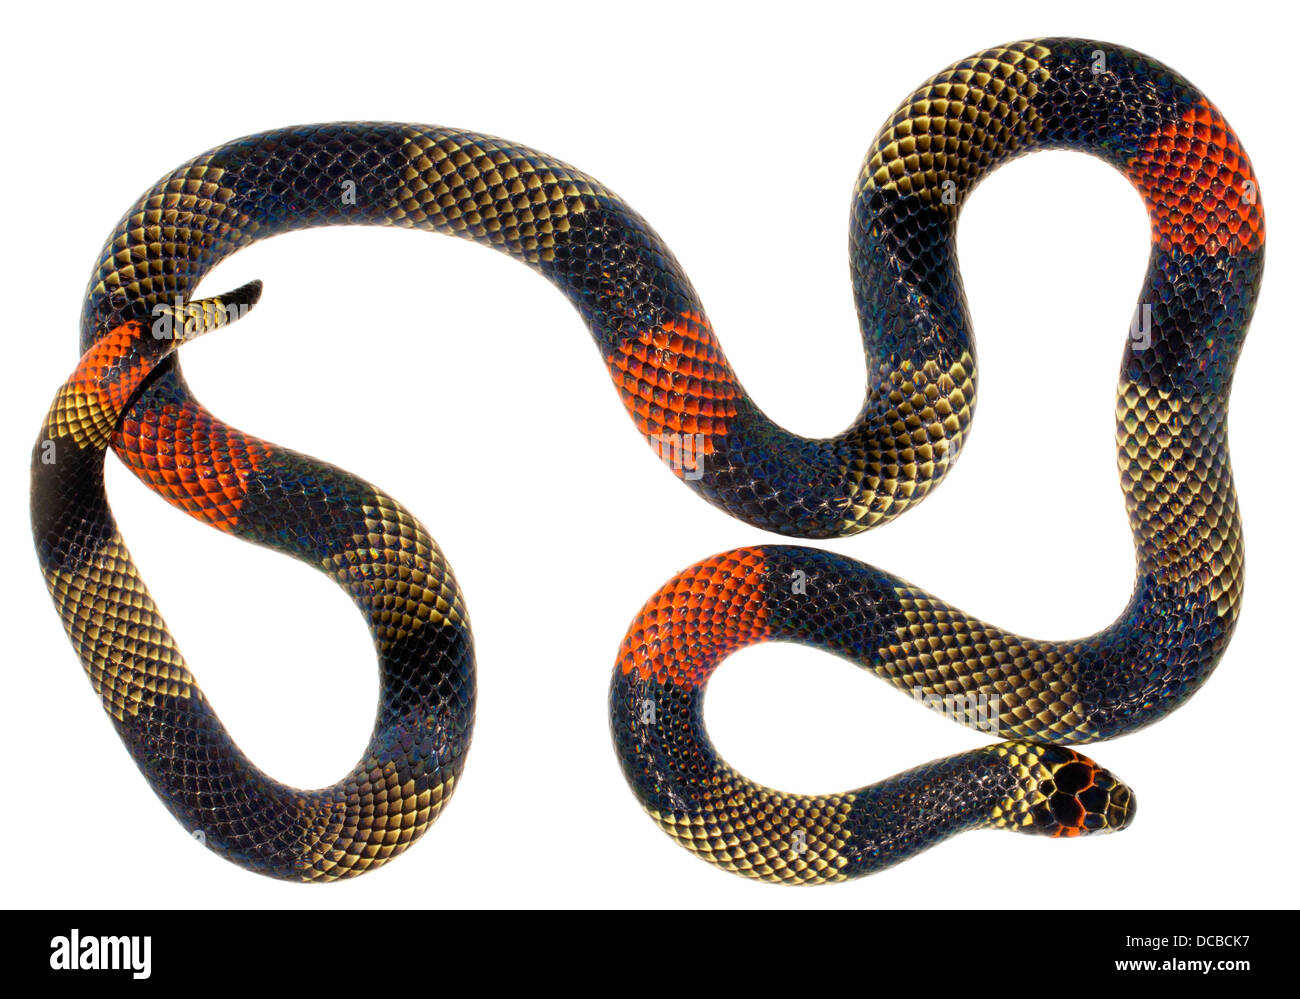 Amazonian Coral Snake (Micrurus spixii obscurus). A venomous snake from the Ecuadorian Amazon. Stock Photo